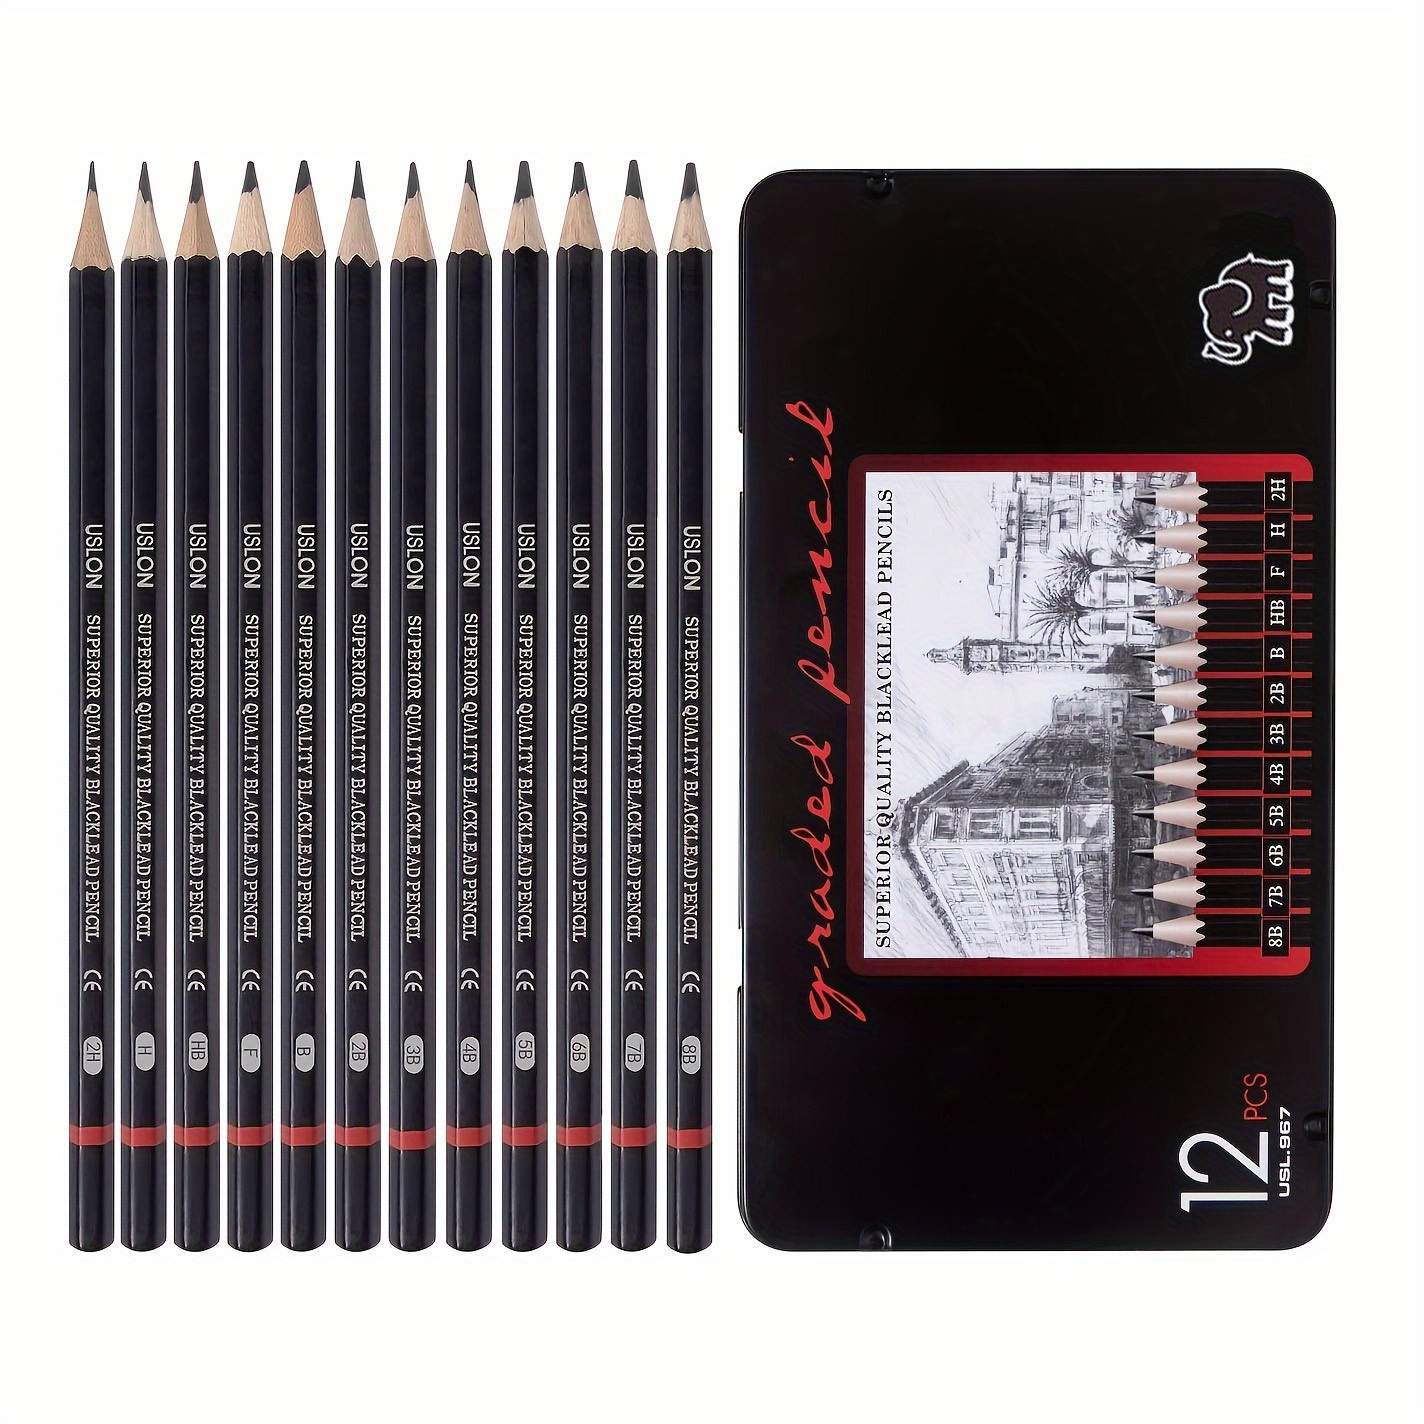 Grey Black Art Pencil Set 12 pcs, For Sketching,Drawing